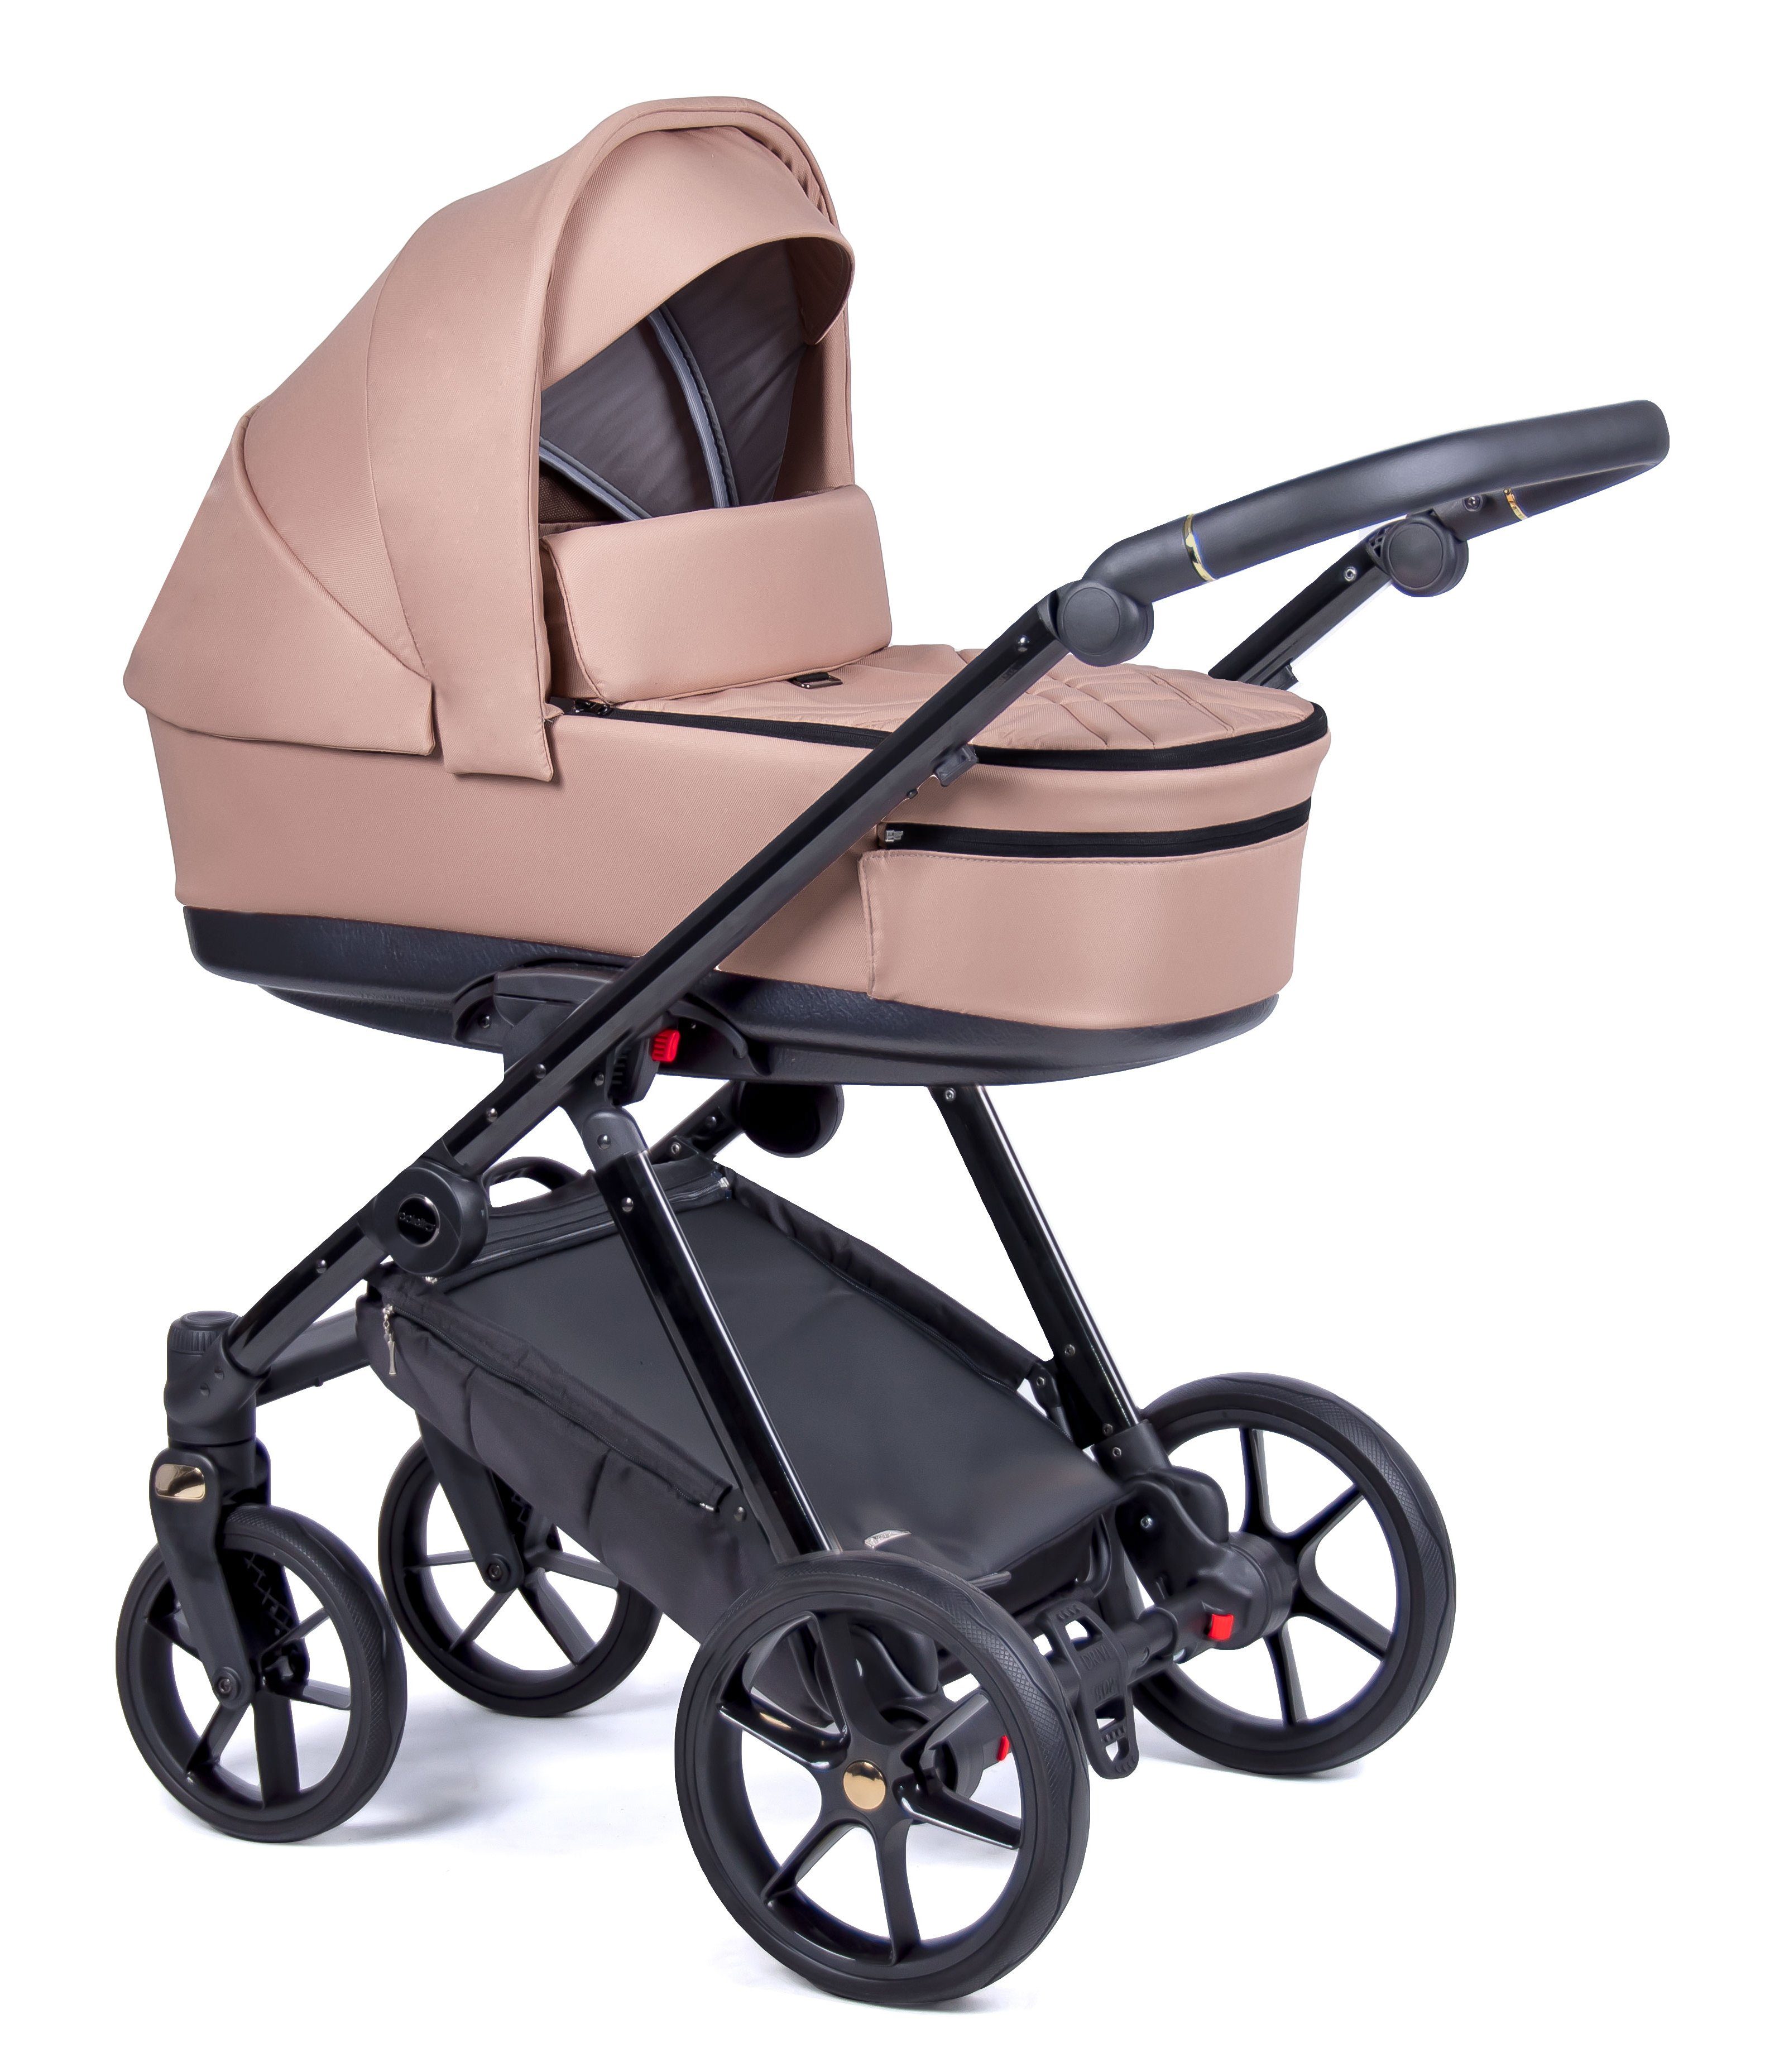 babies-on-wheels Kombi-Kinderwagen 24 in Teile - = 1 Kinderwagen-Set Designs schwarz Gestell Axxis in 2 Beige 14 